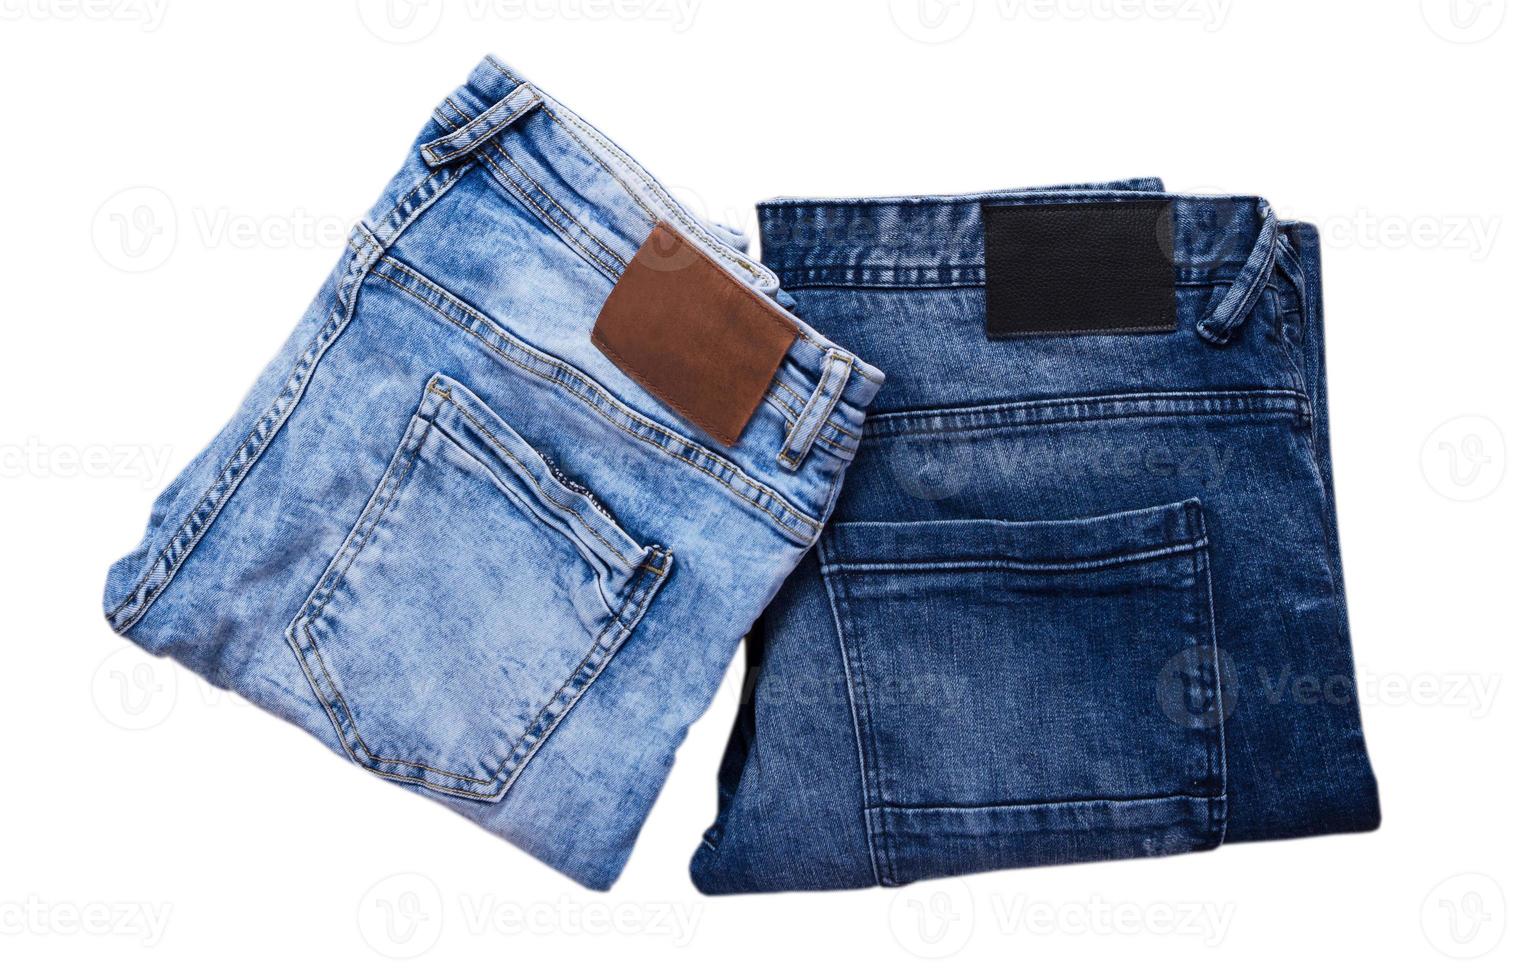 mezclilla doblada, jeans azul y azul oscuro sobre fondo blanco o collage foto